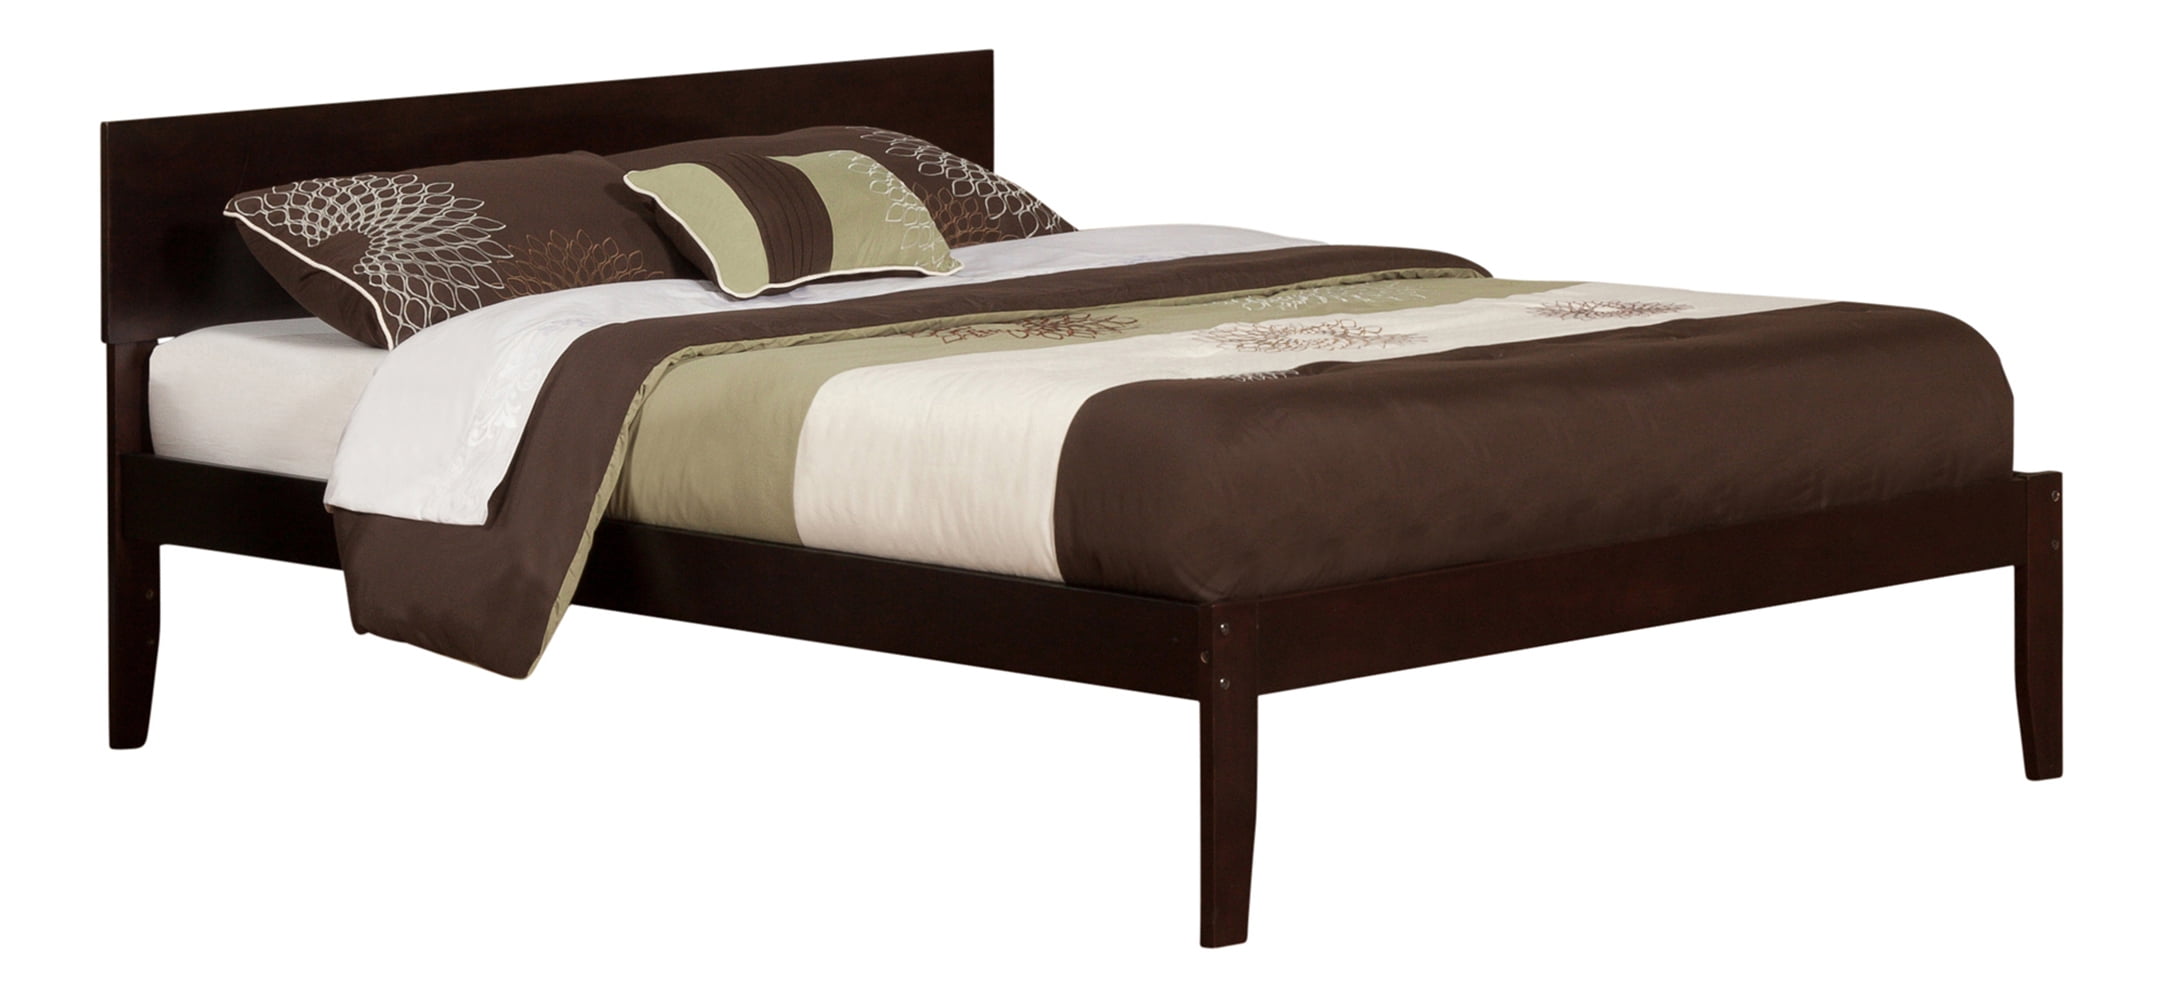 Picture of Atlantic Furniture AR8151001 Orlando Open Foot Bed, Espresso - King